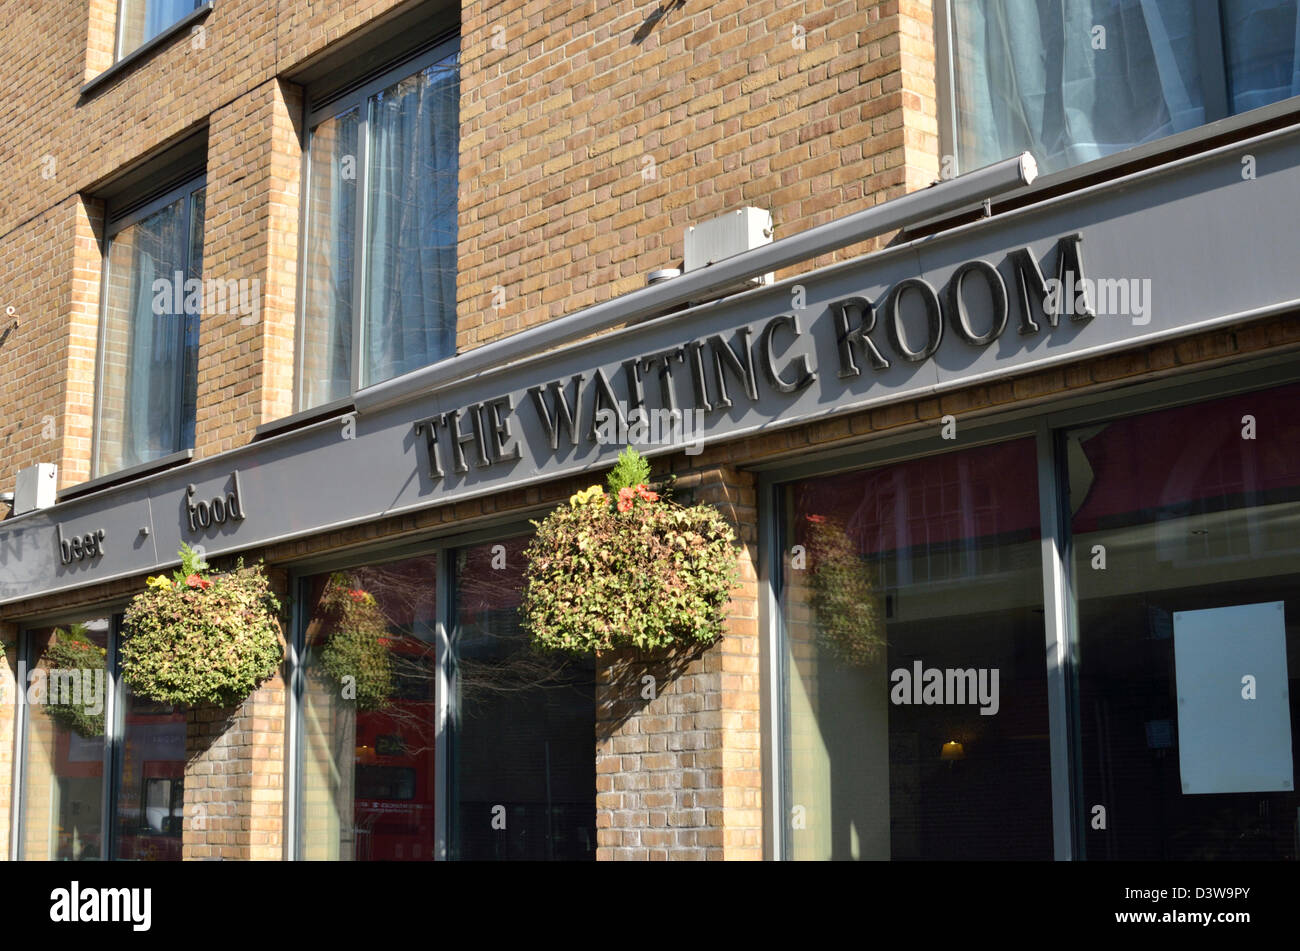 The Waiting Room pub in York Way, King's Cross, London, UK Stock Photo